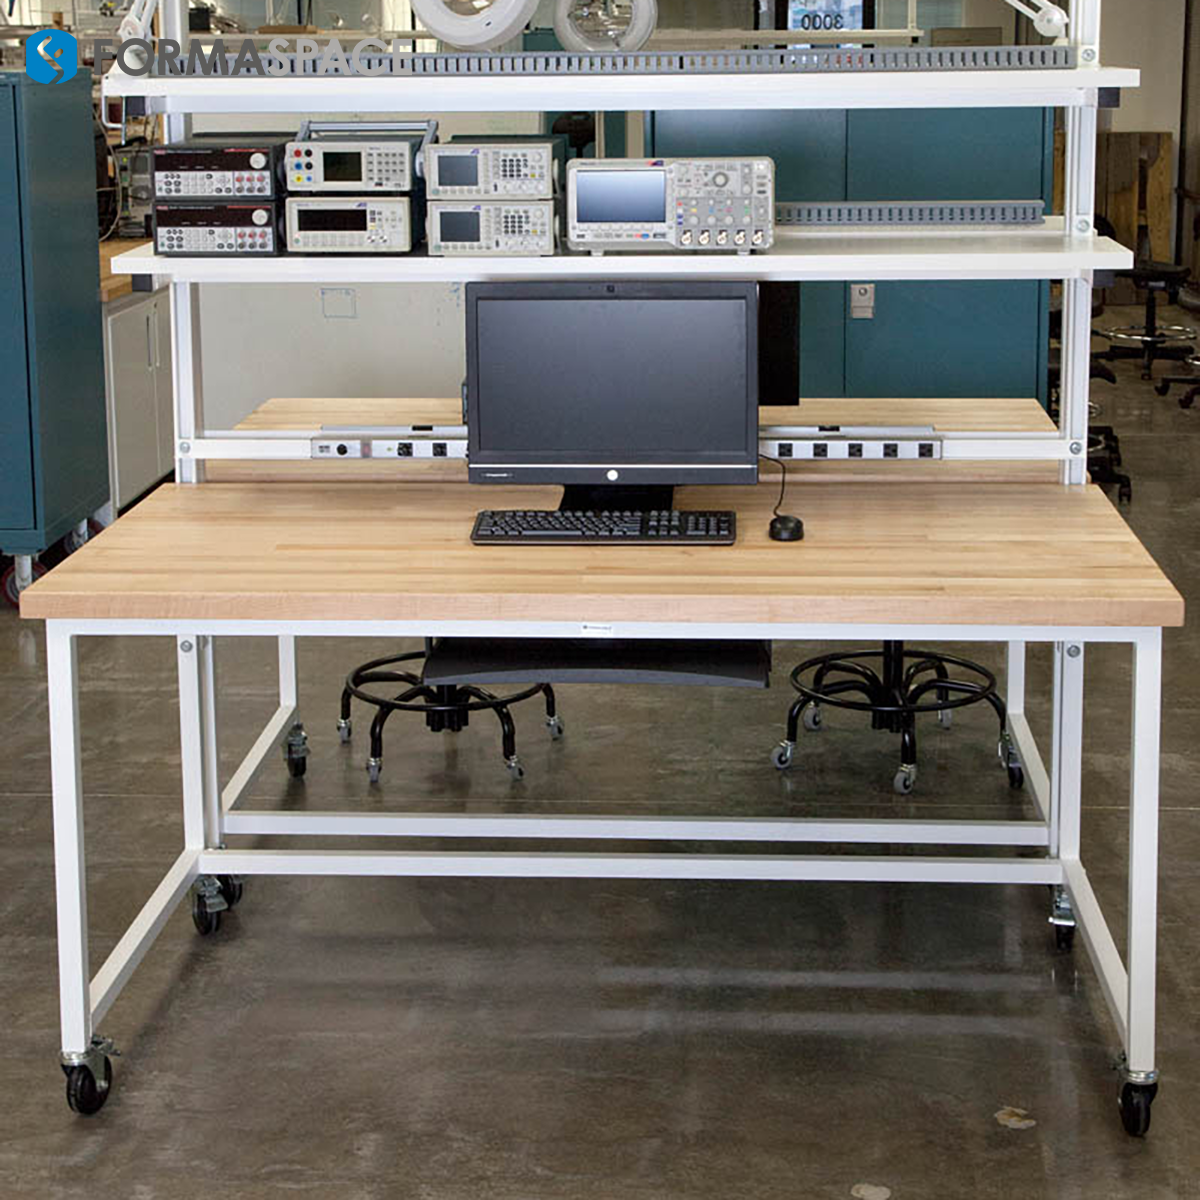 Student Benchmarx Workstation in Innovation Lab